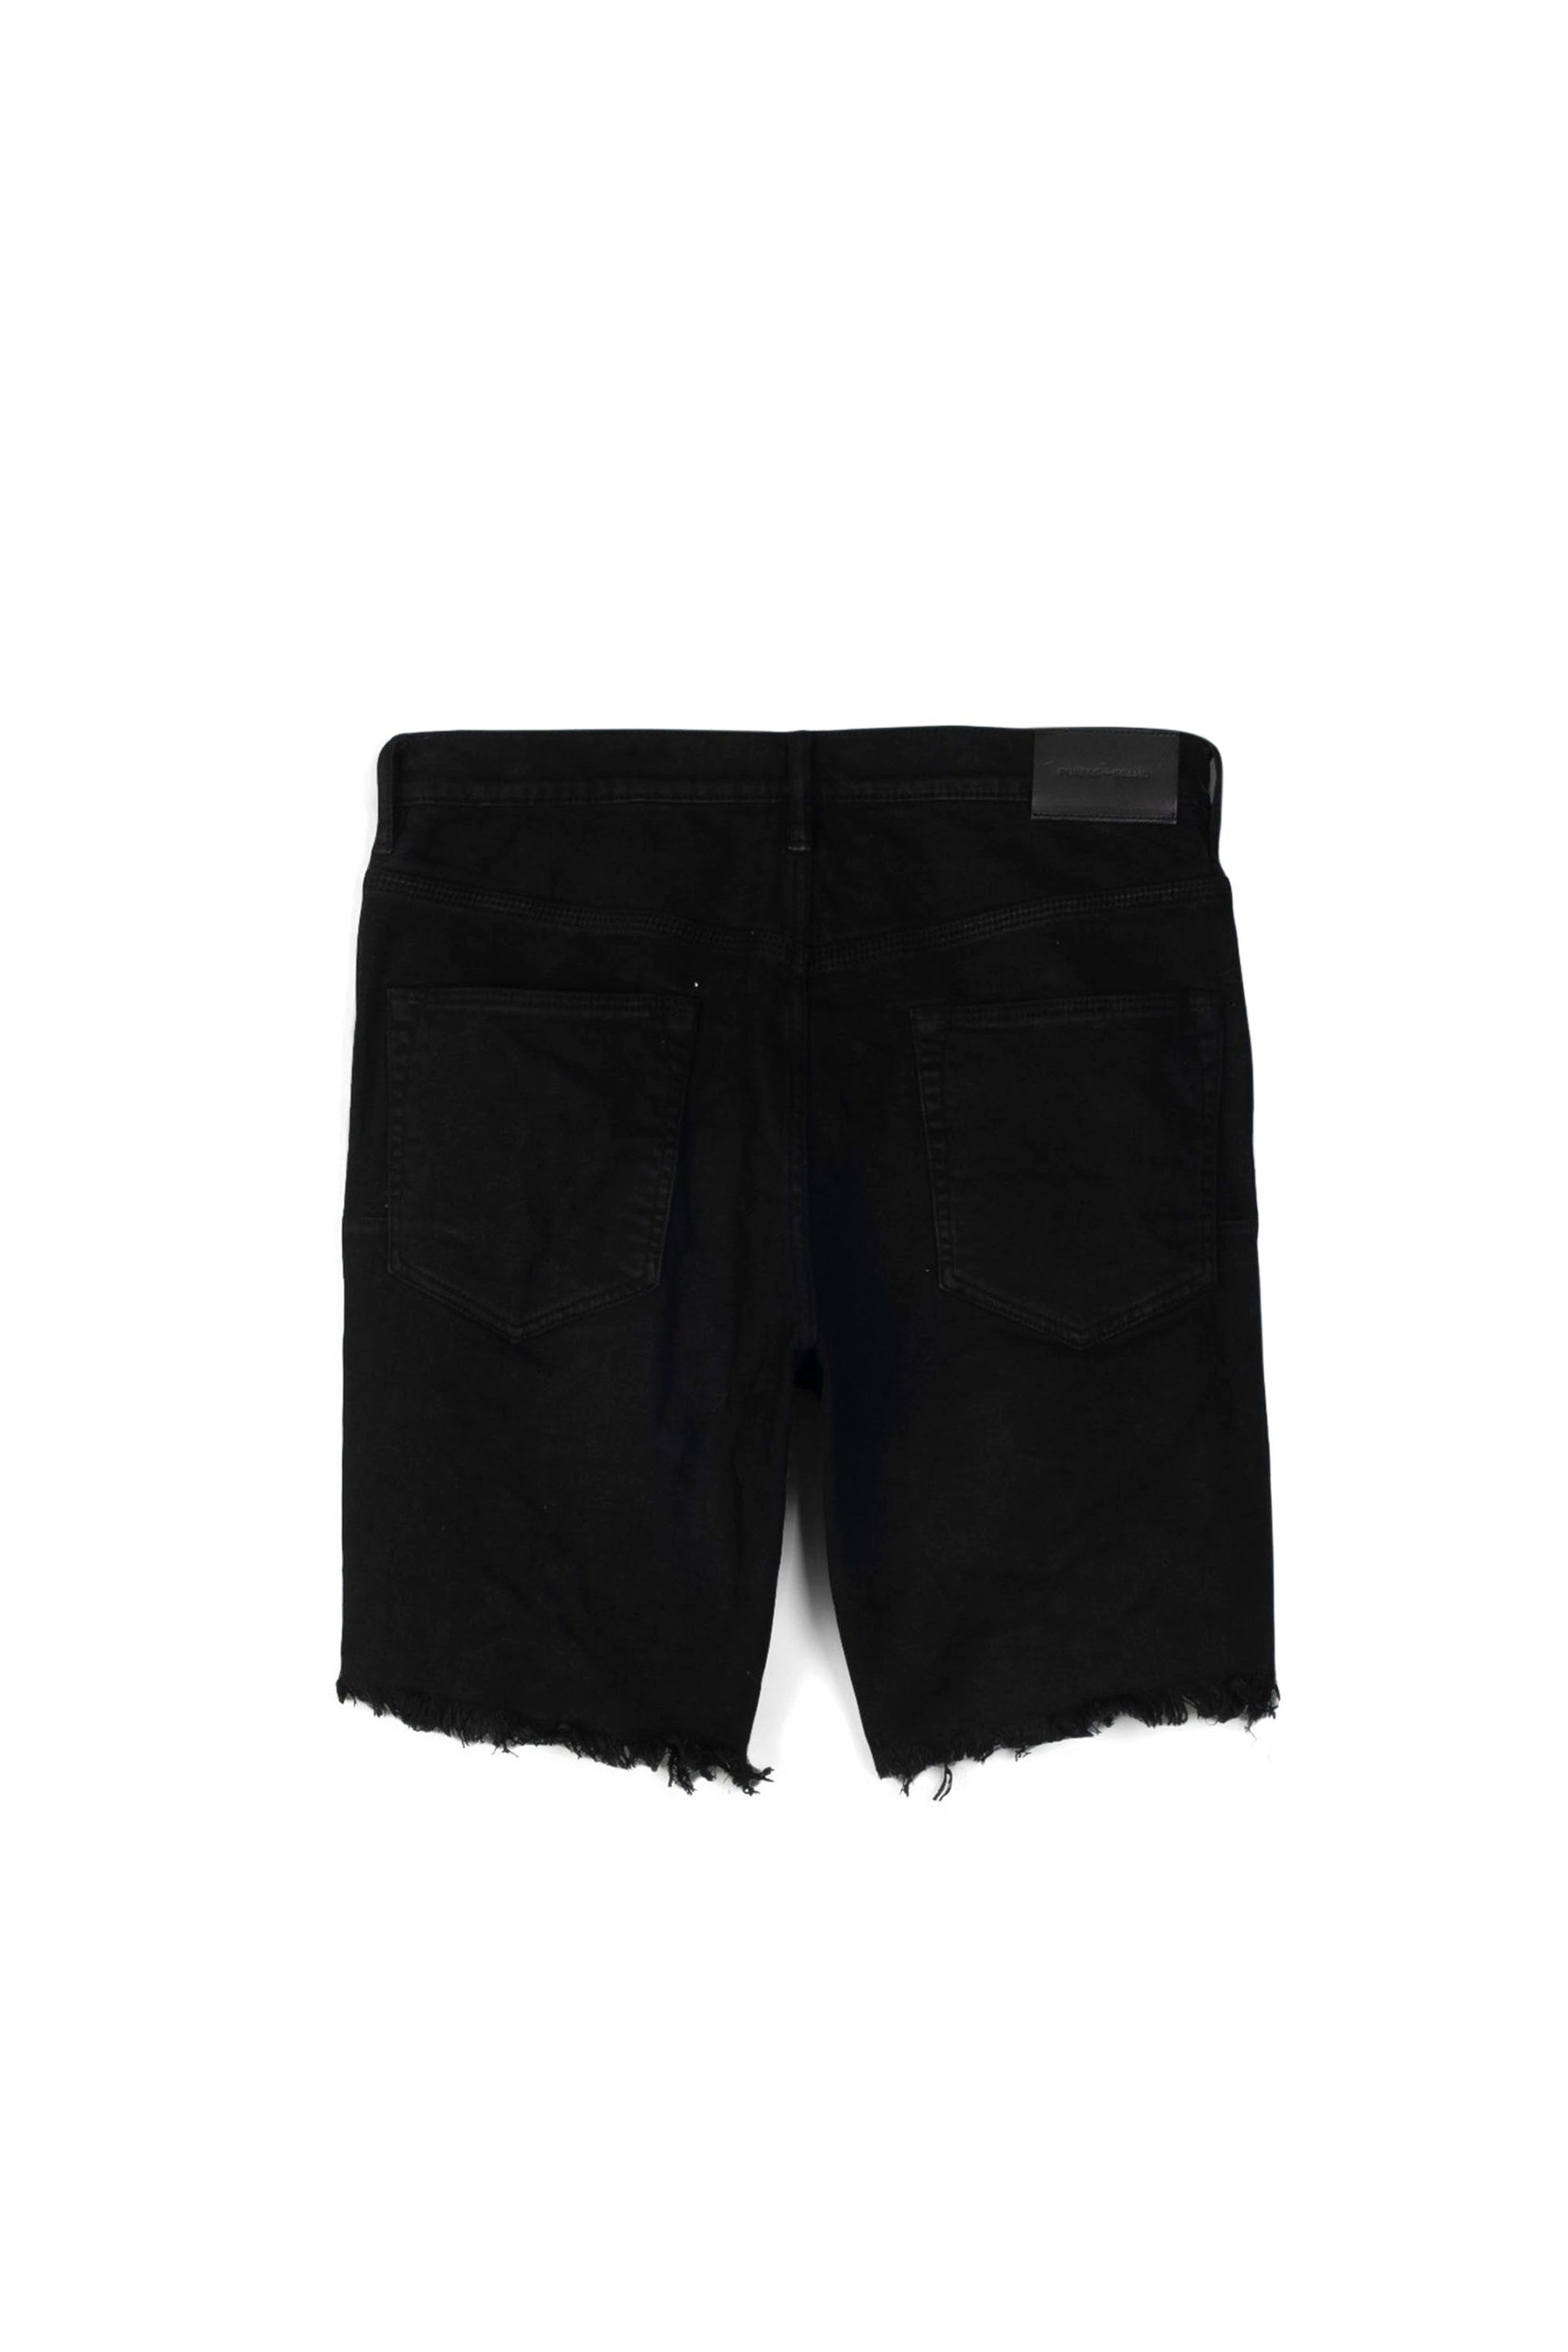 PURPLE BRAND - Men's Denim Jean Short - Mid Rise Short - Style No. P020 - Grosgrain Tuxedo Stripe Black - Back